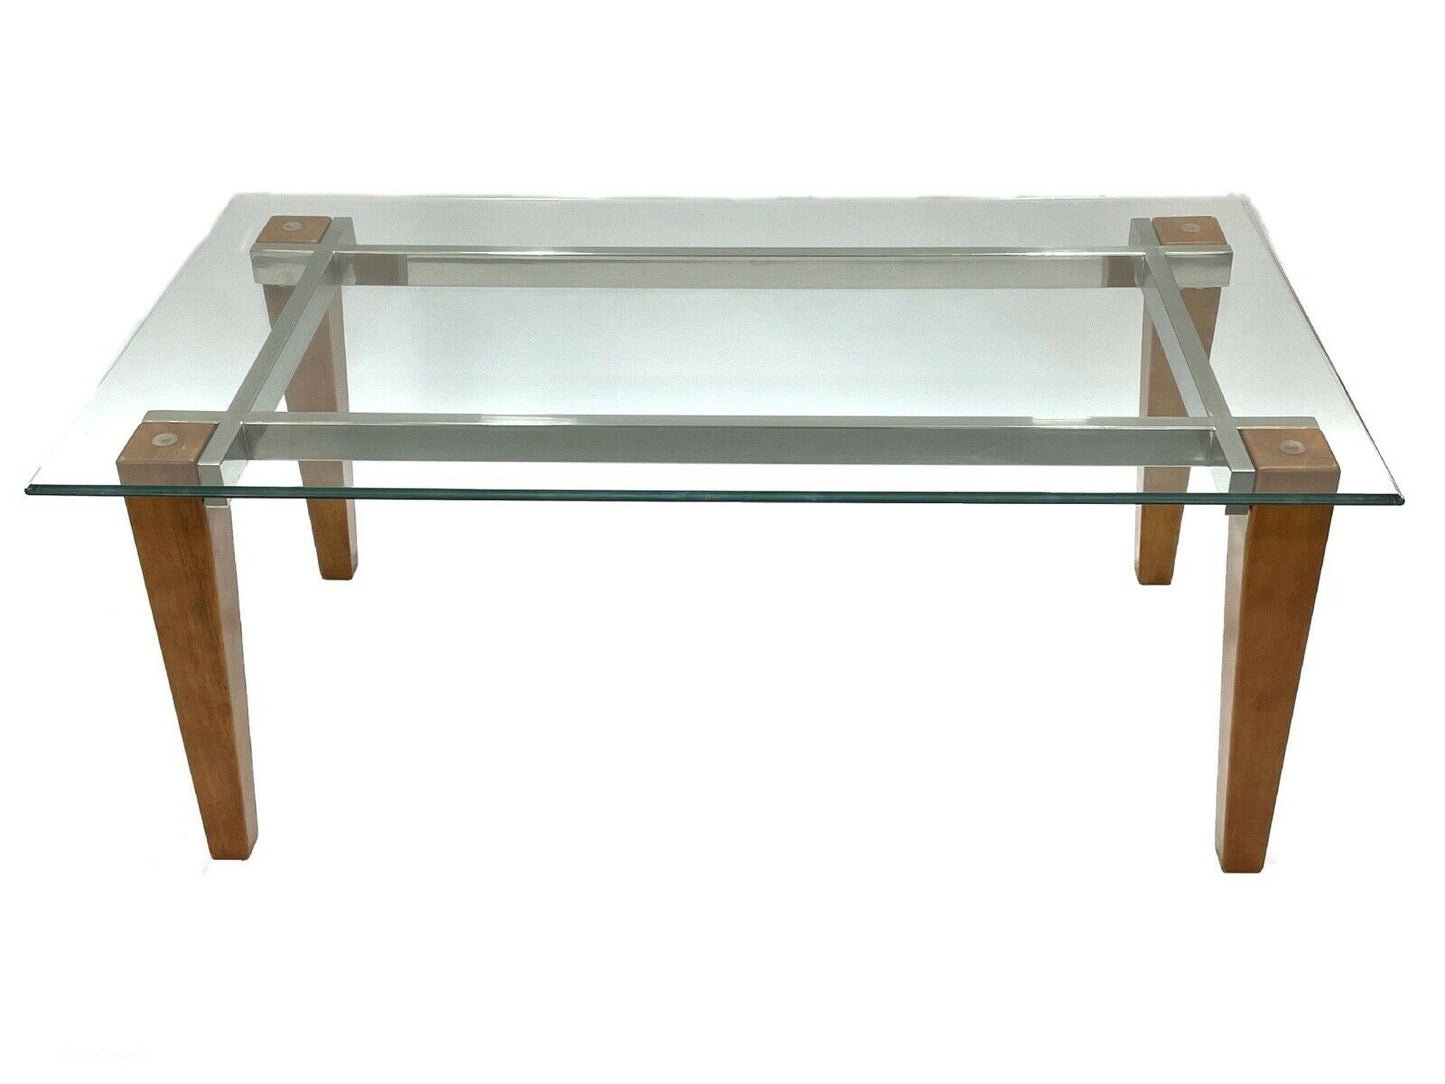 A Modern, Teak, Chrome & Glass Coffee Table